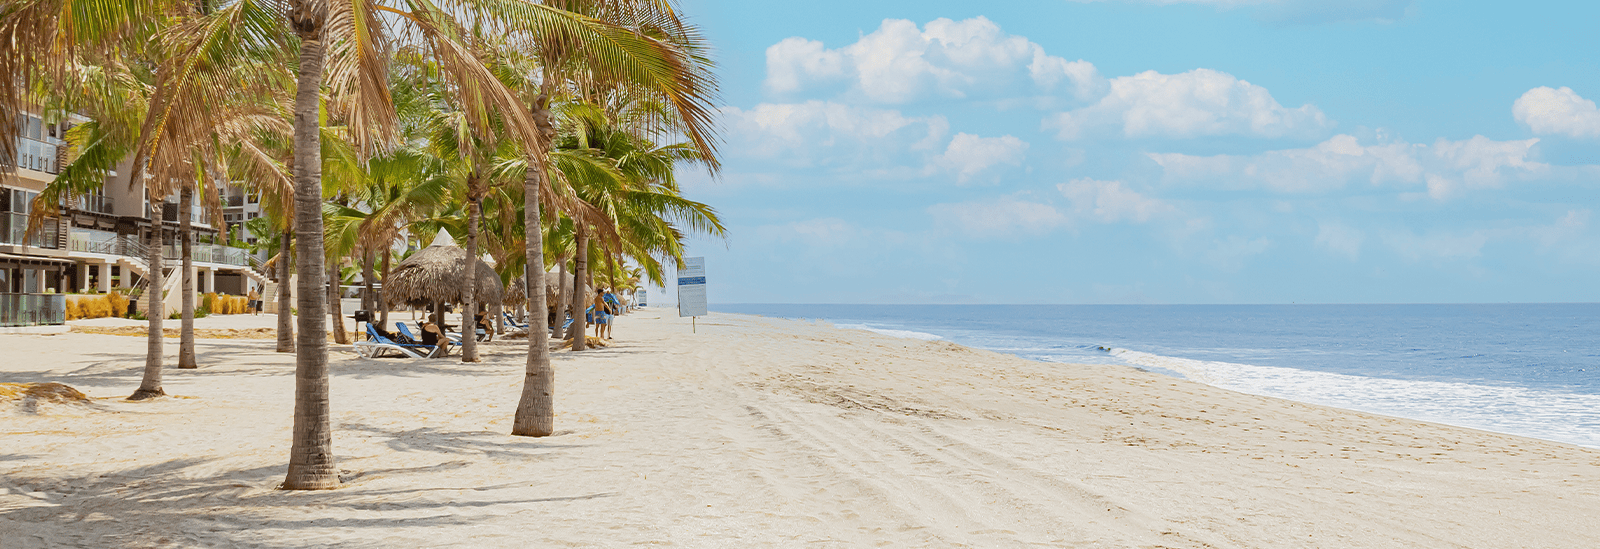 playa caracol beach sky palmers